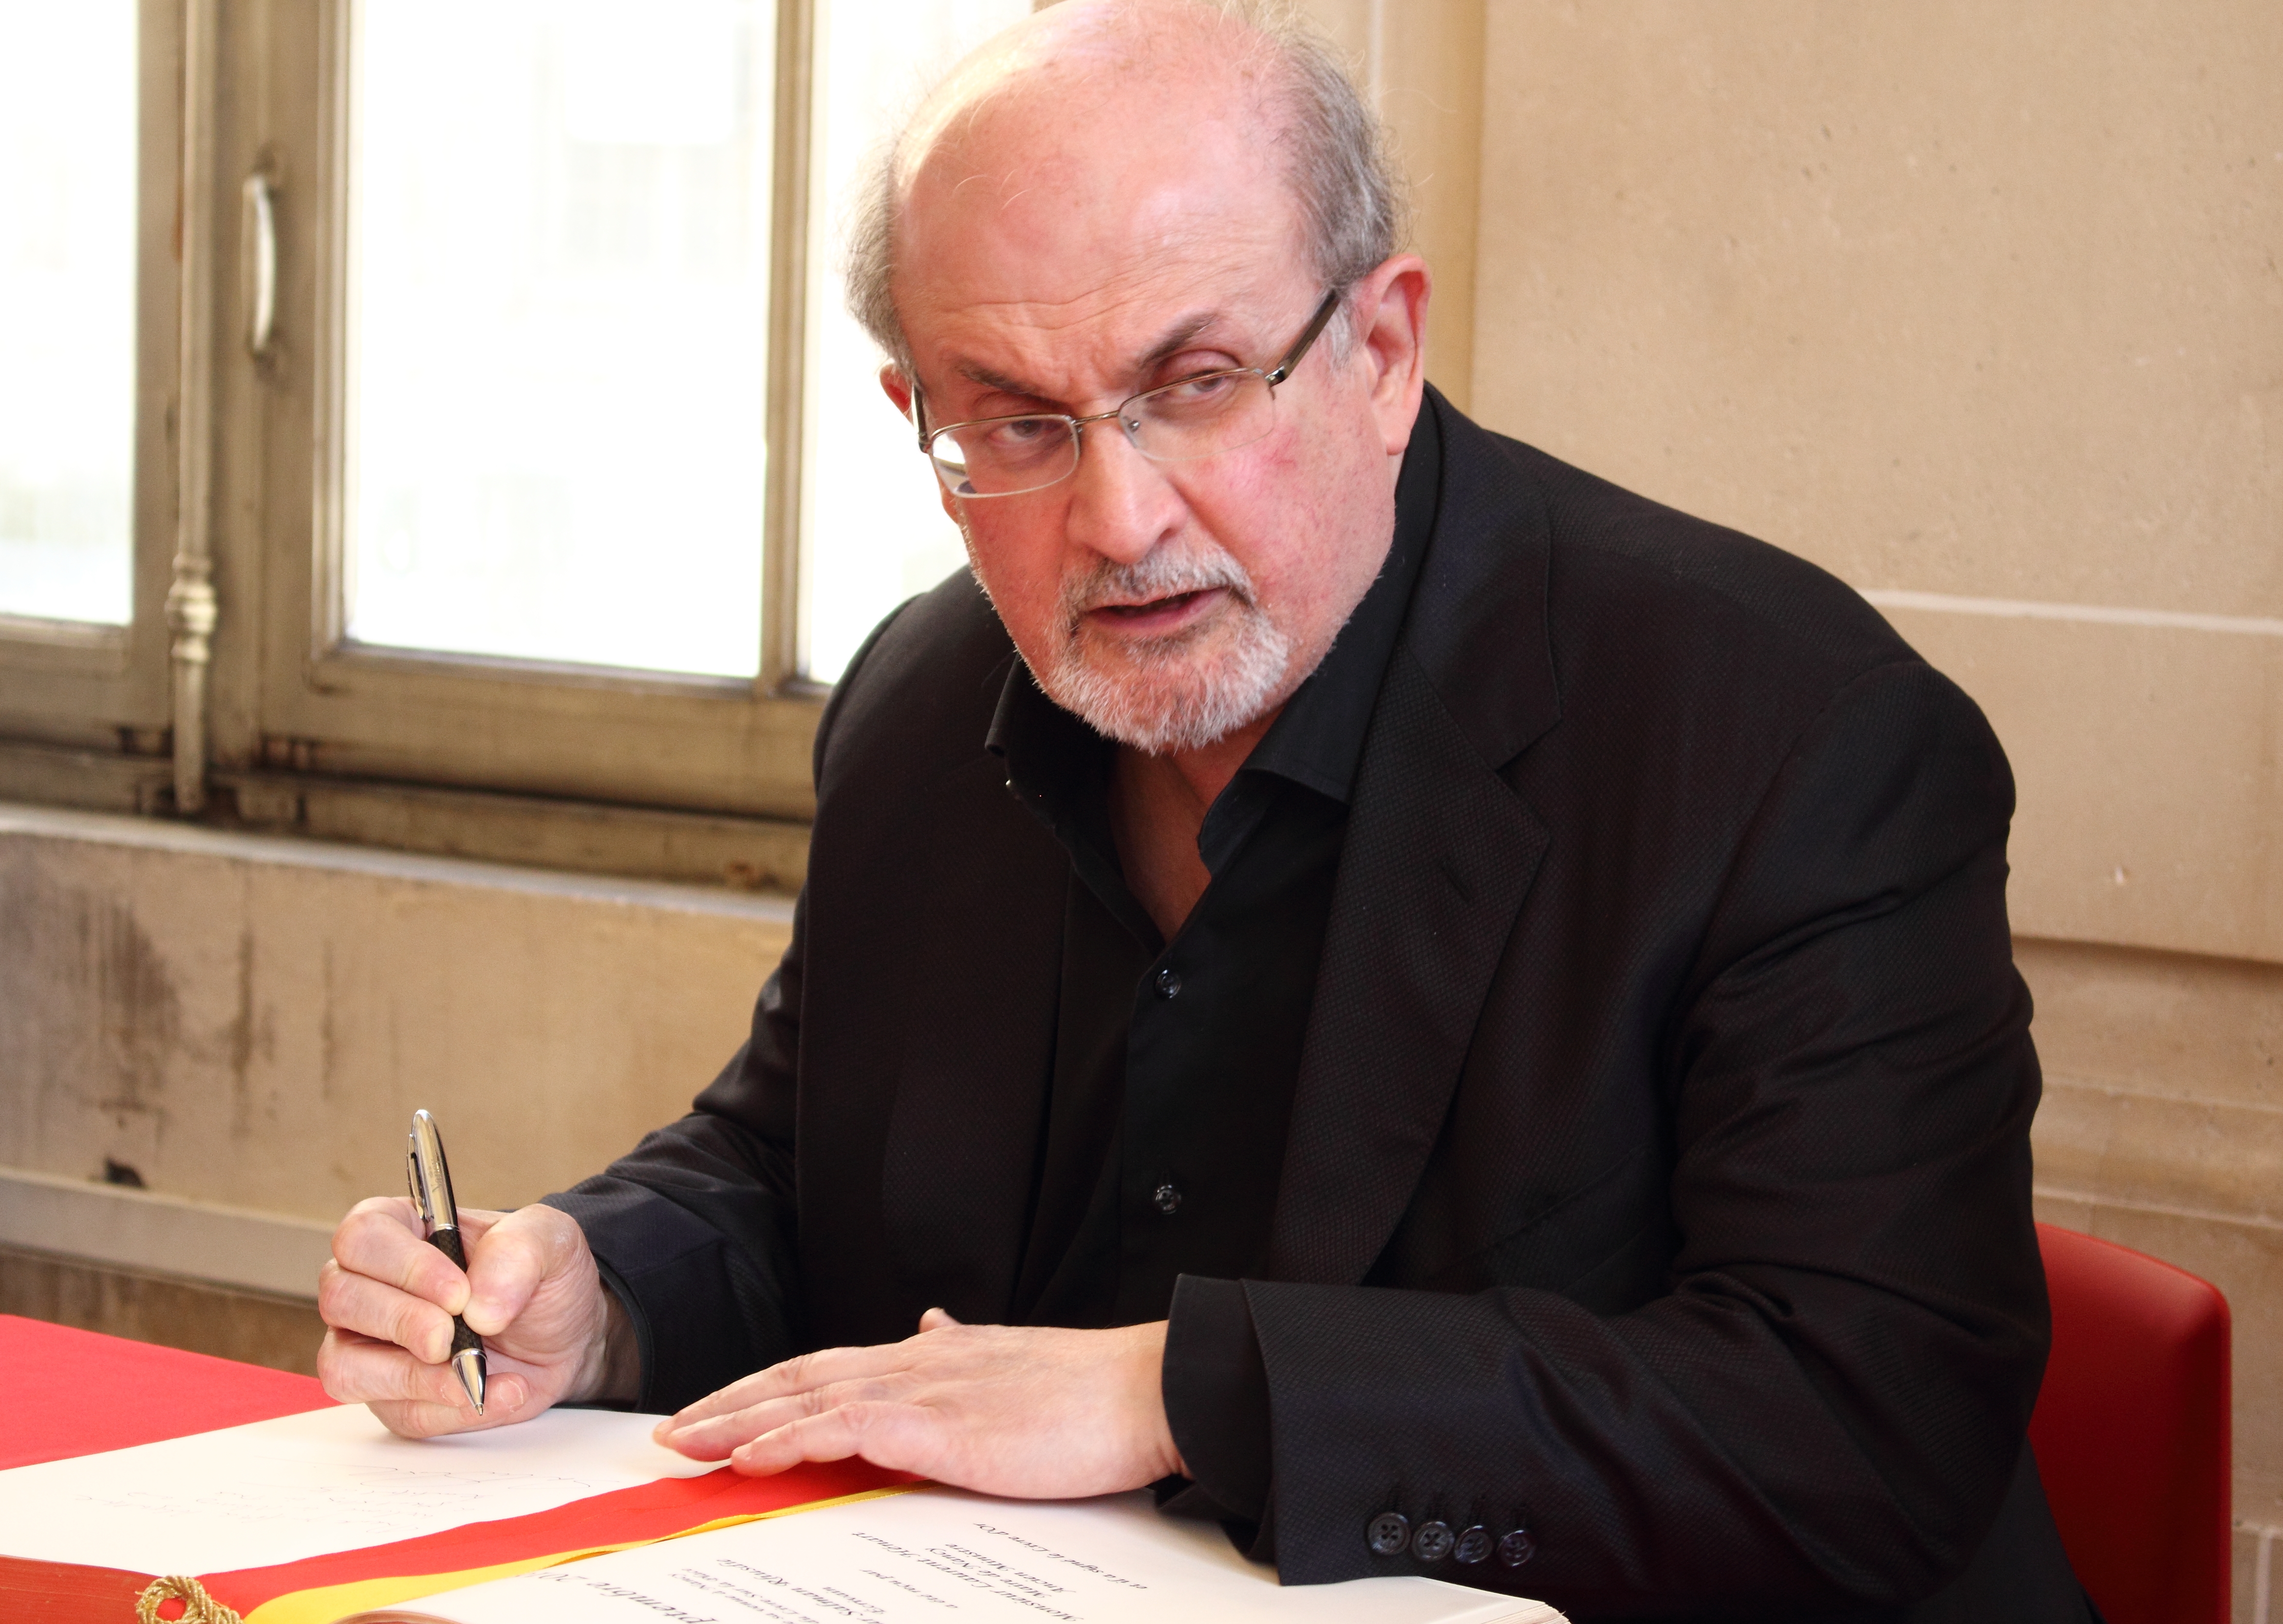 Salman Rushdie signing a book